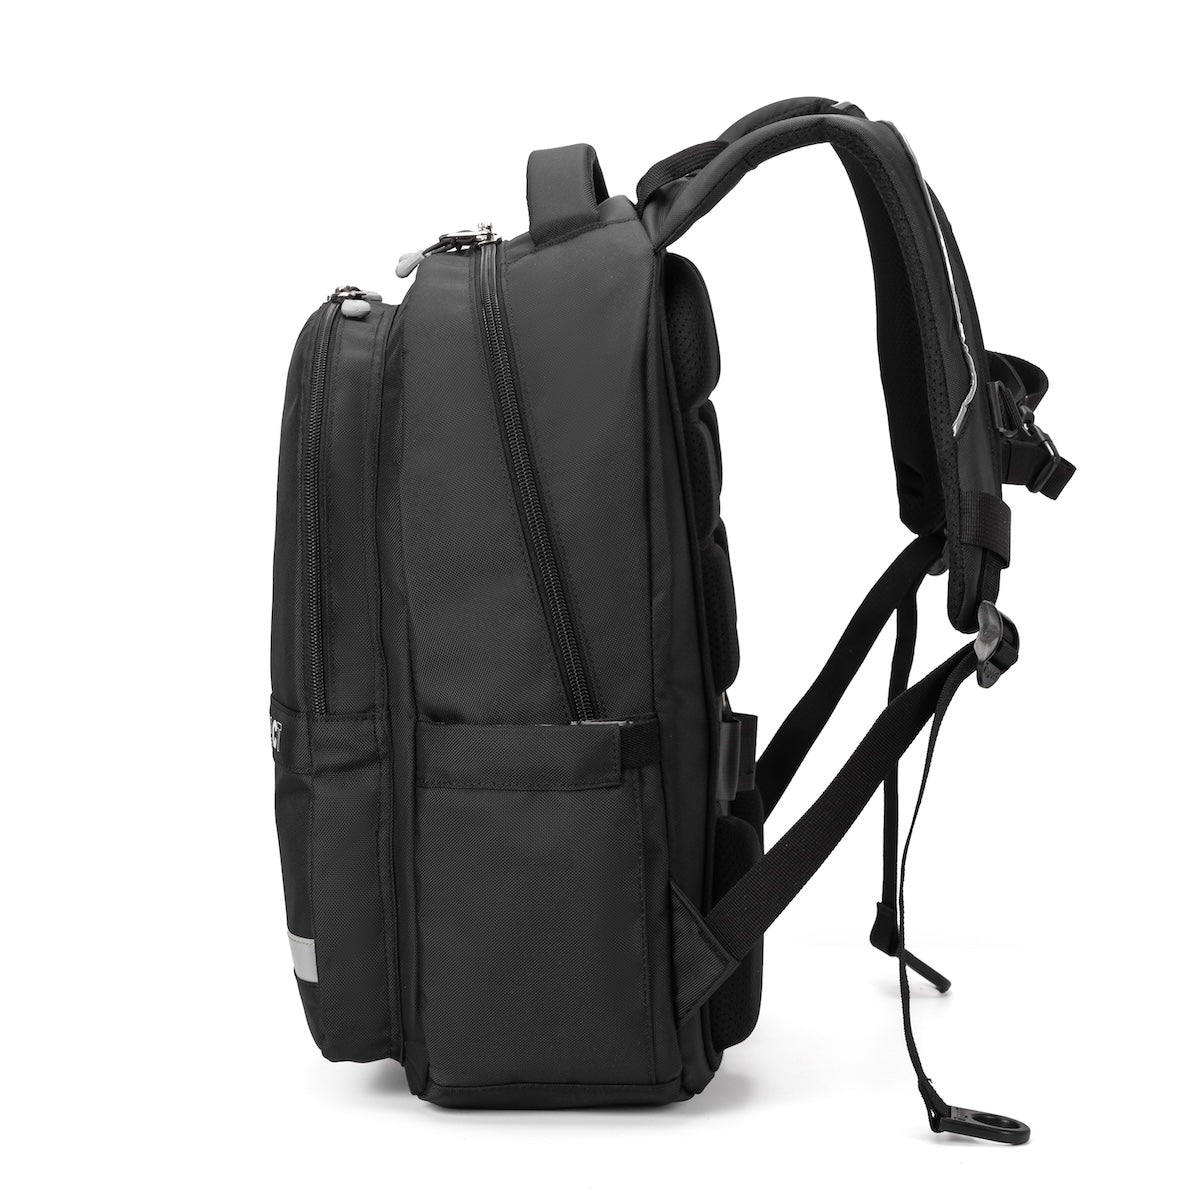 IMPACT - IPEG-2368 - Impact Ergo-Comfort Spinal Support Backpack